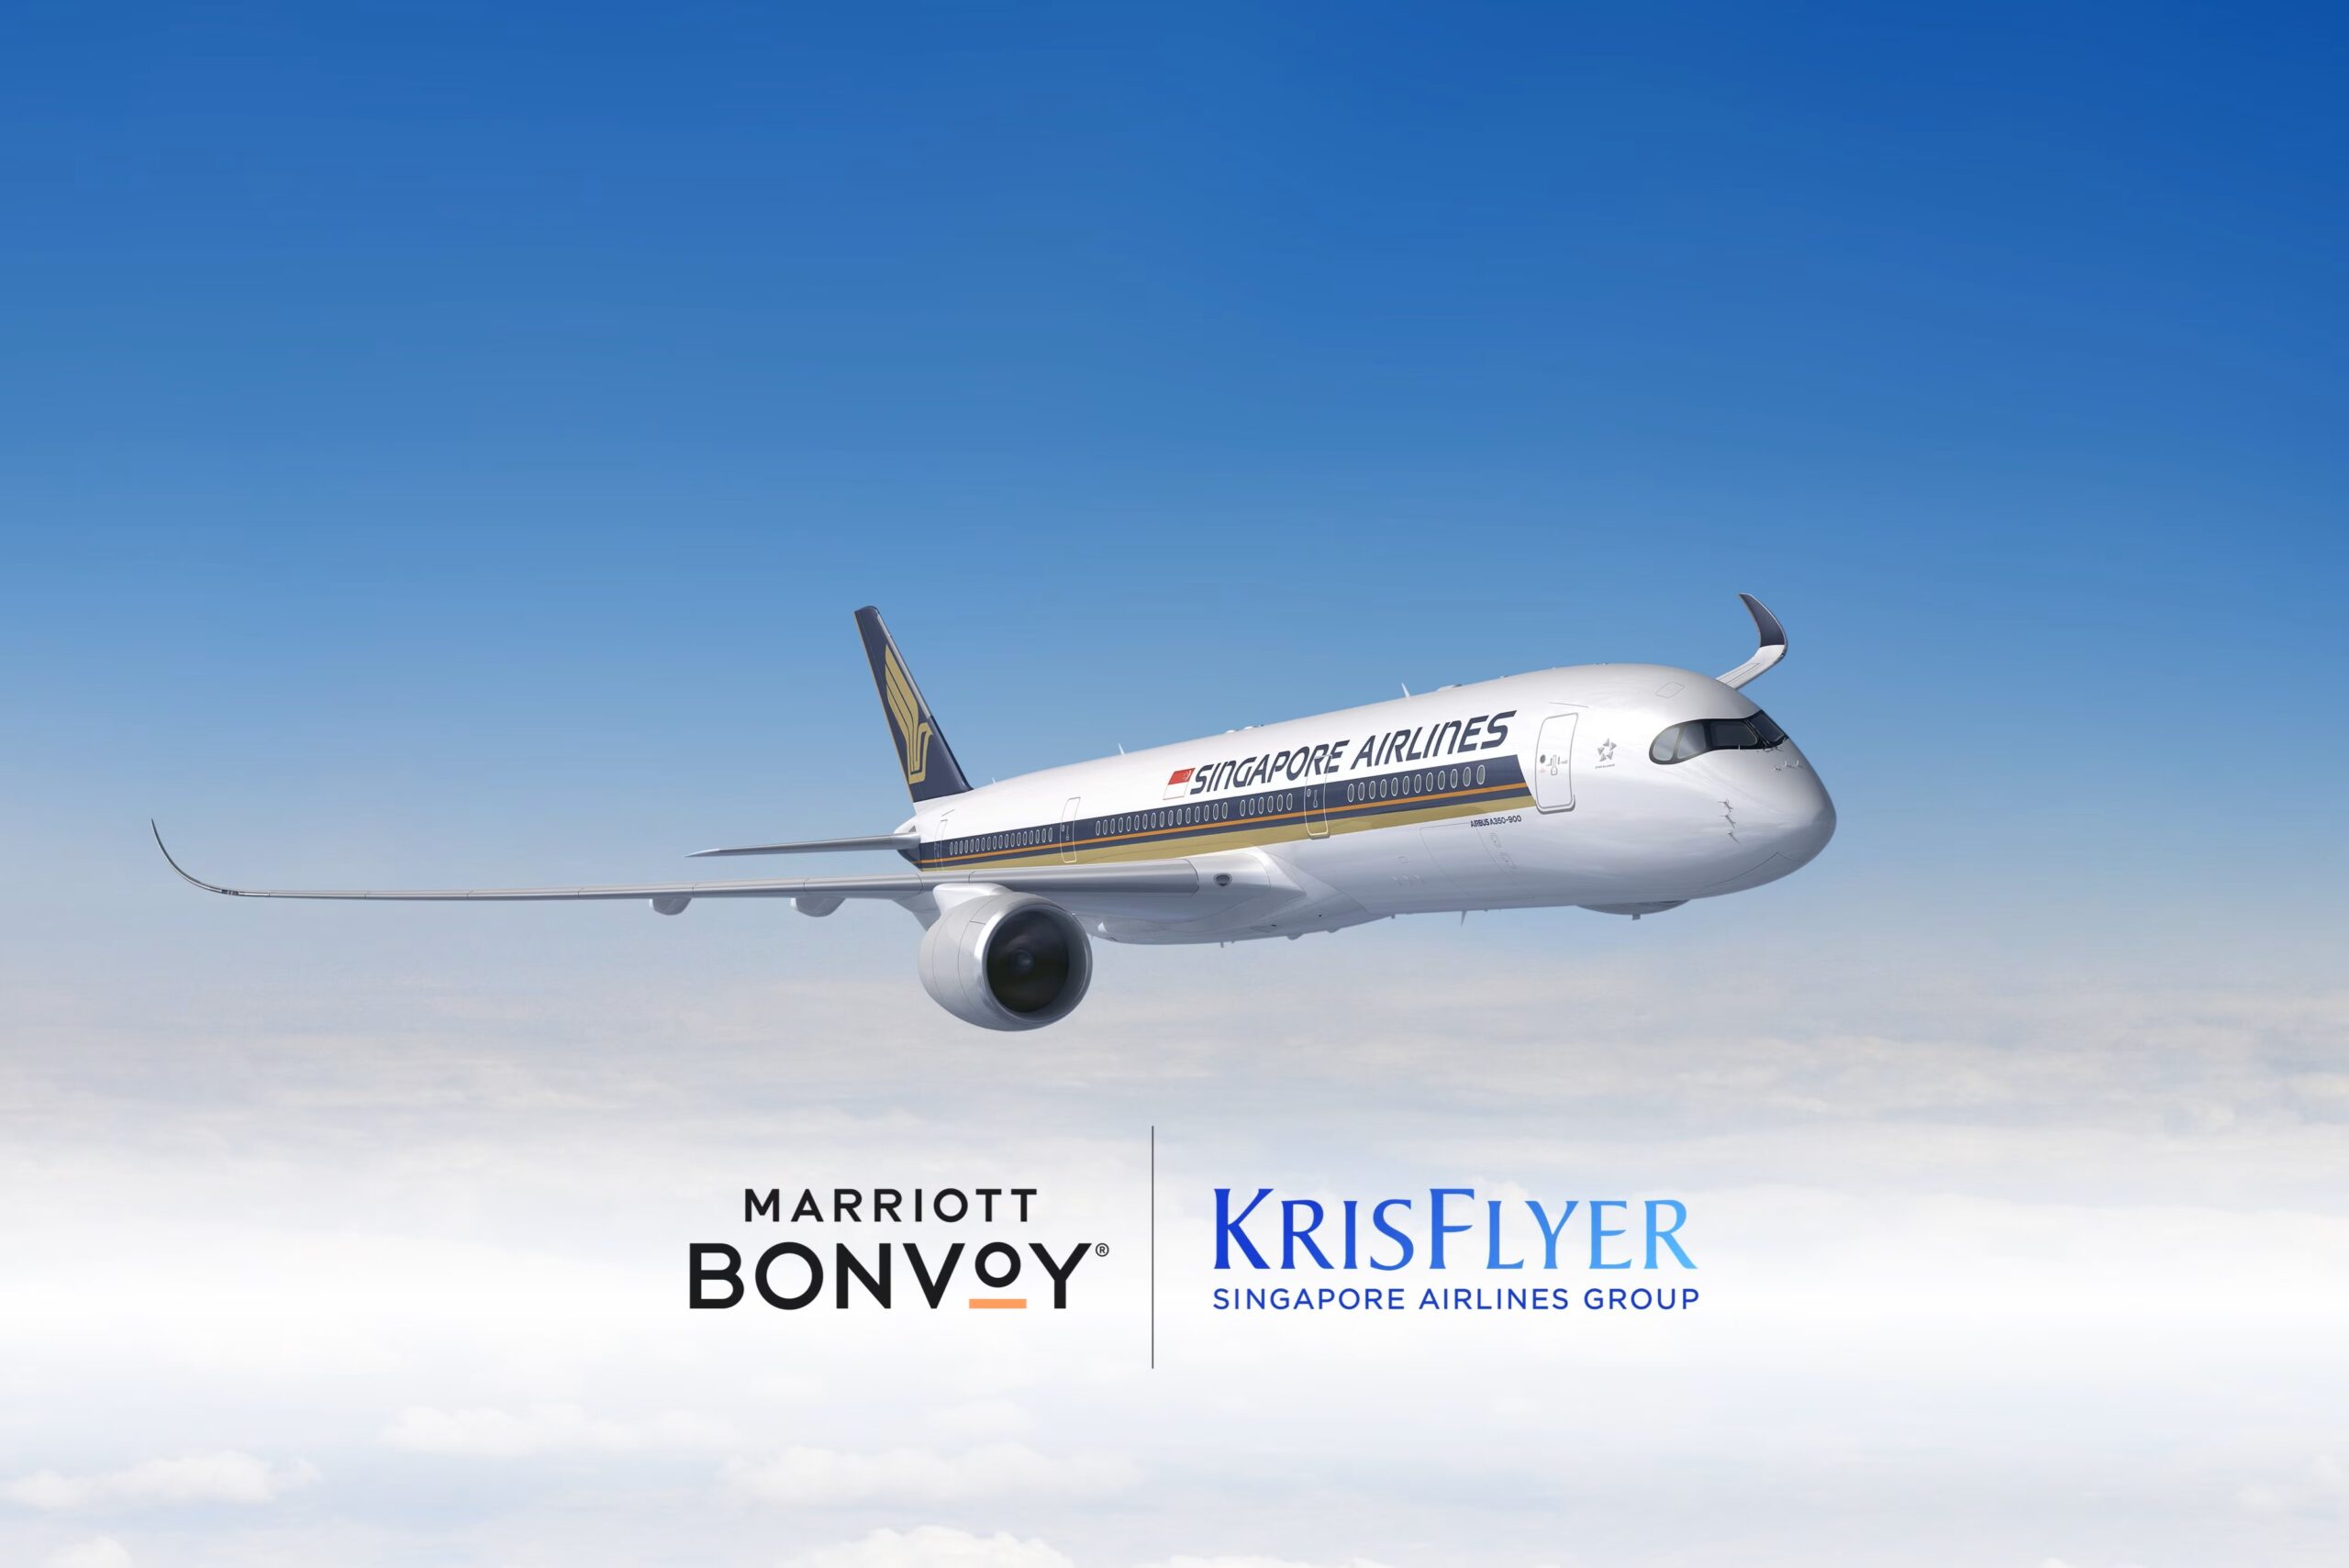 Marriott Bonvoy and KrisFlyer Singapore Airlines deepen partnership